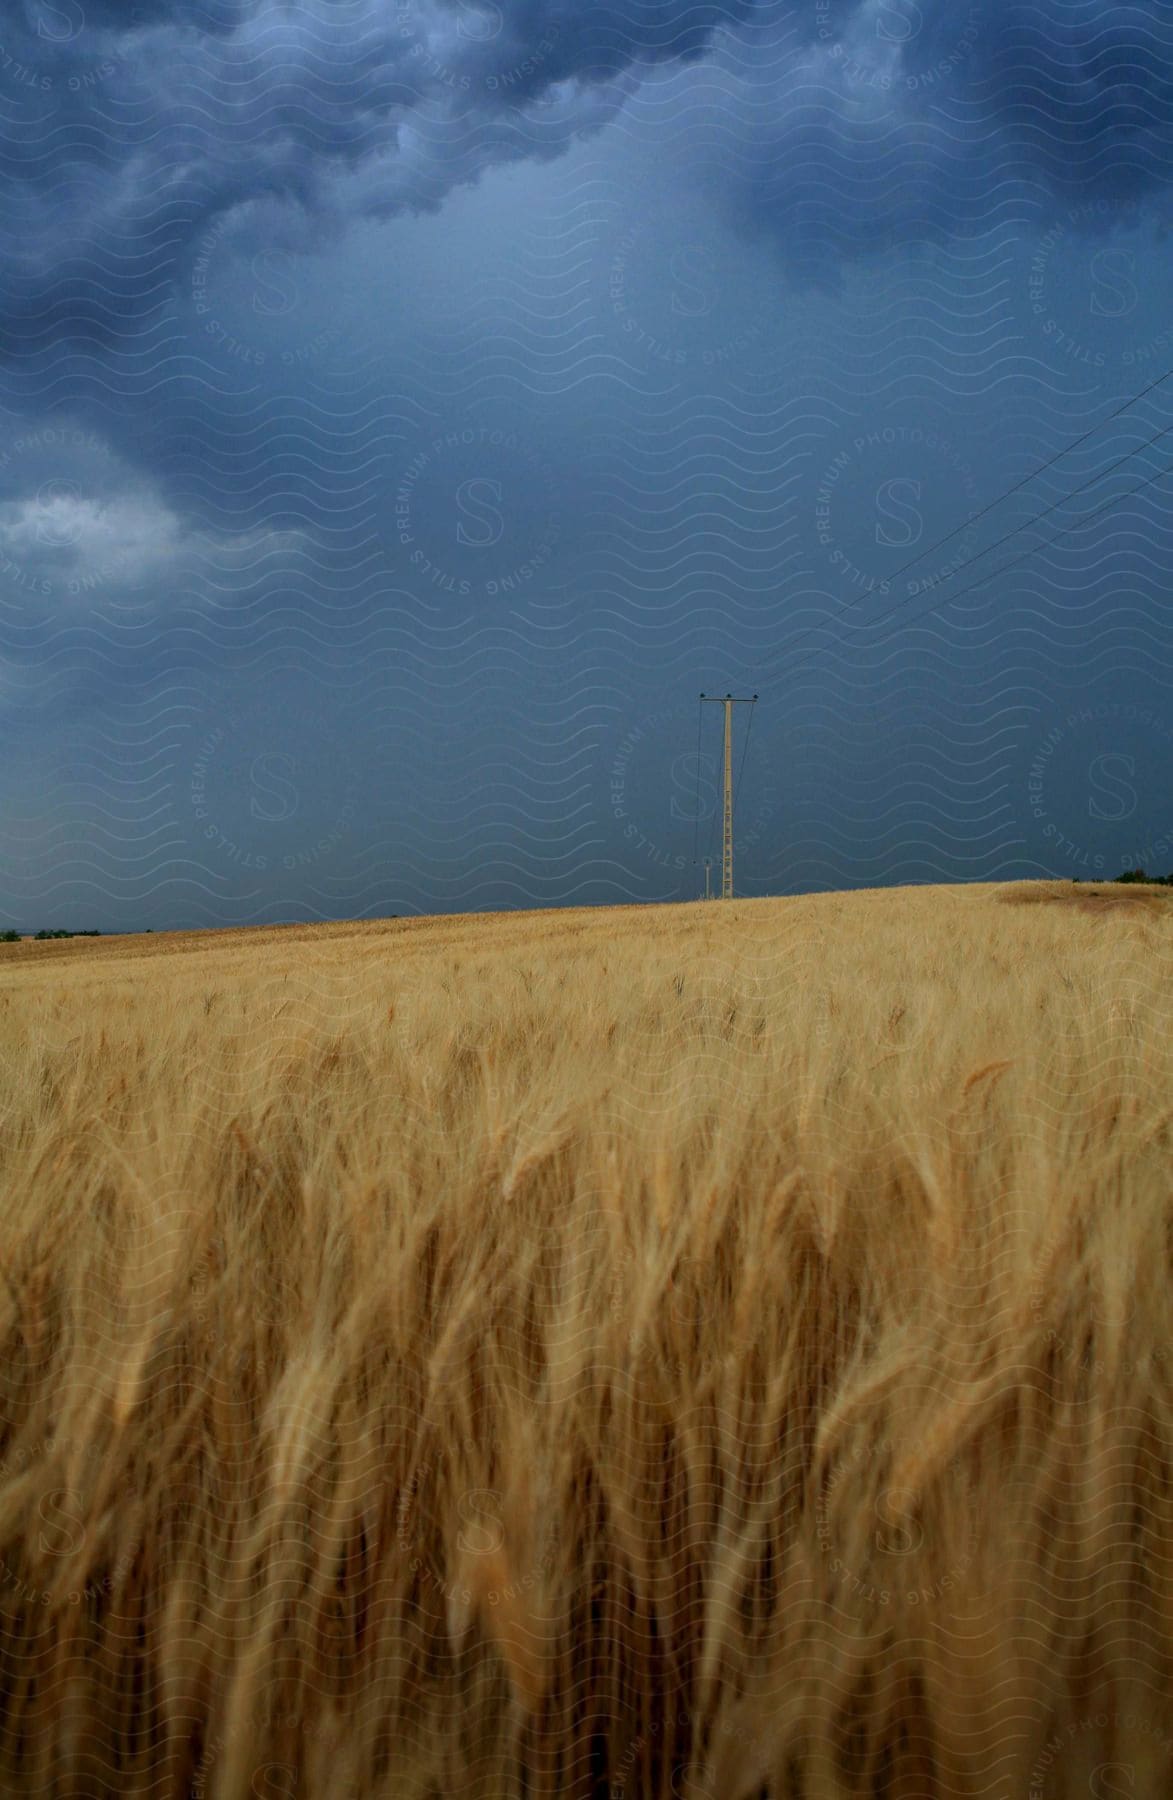 Utility pole in a golden wheat field under a dark clouded night sky